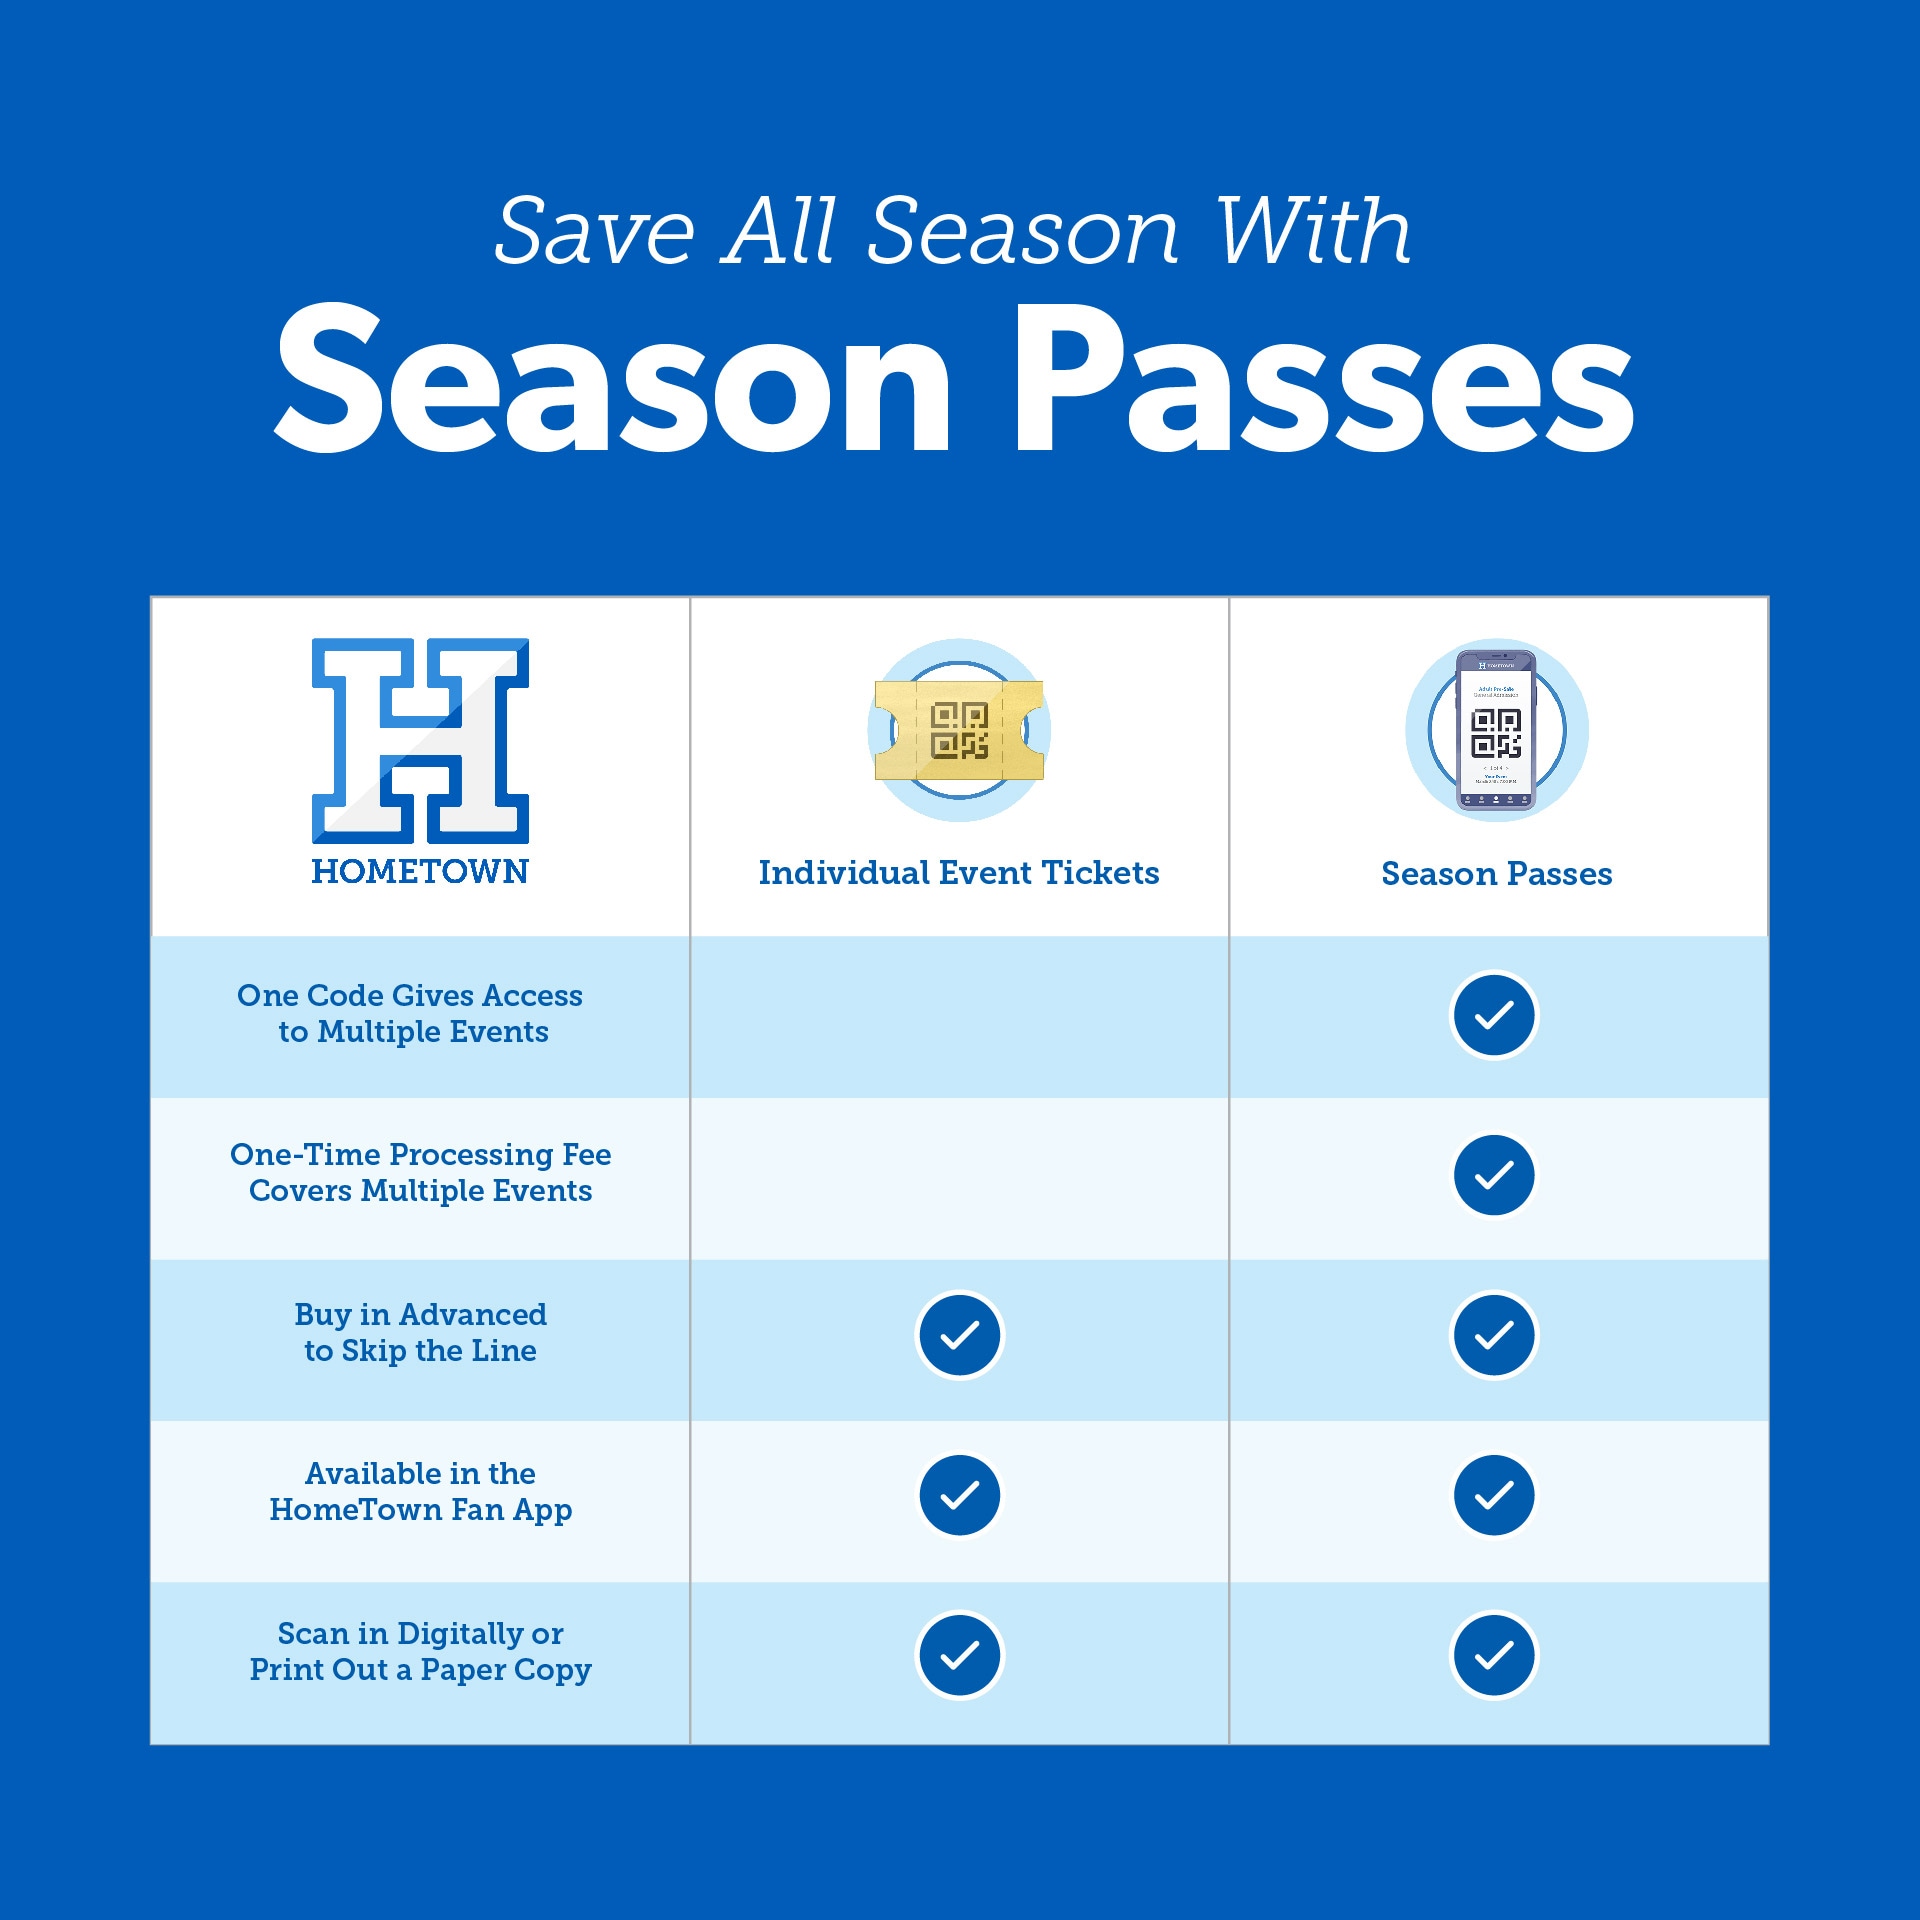 Season Pass benefits